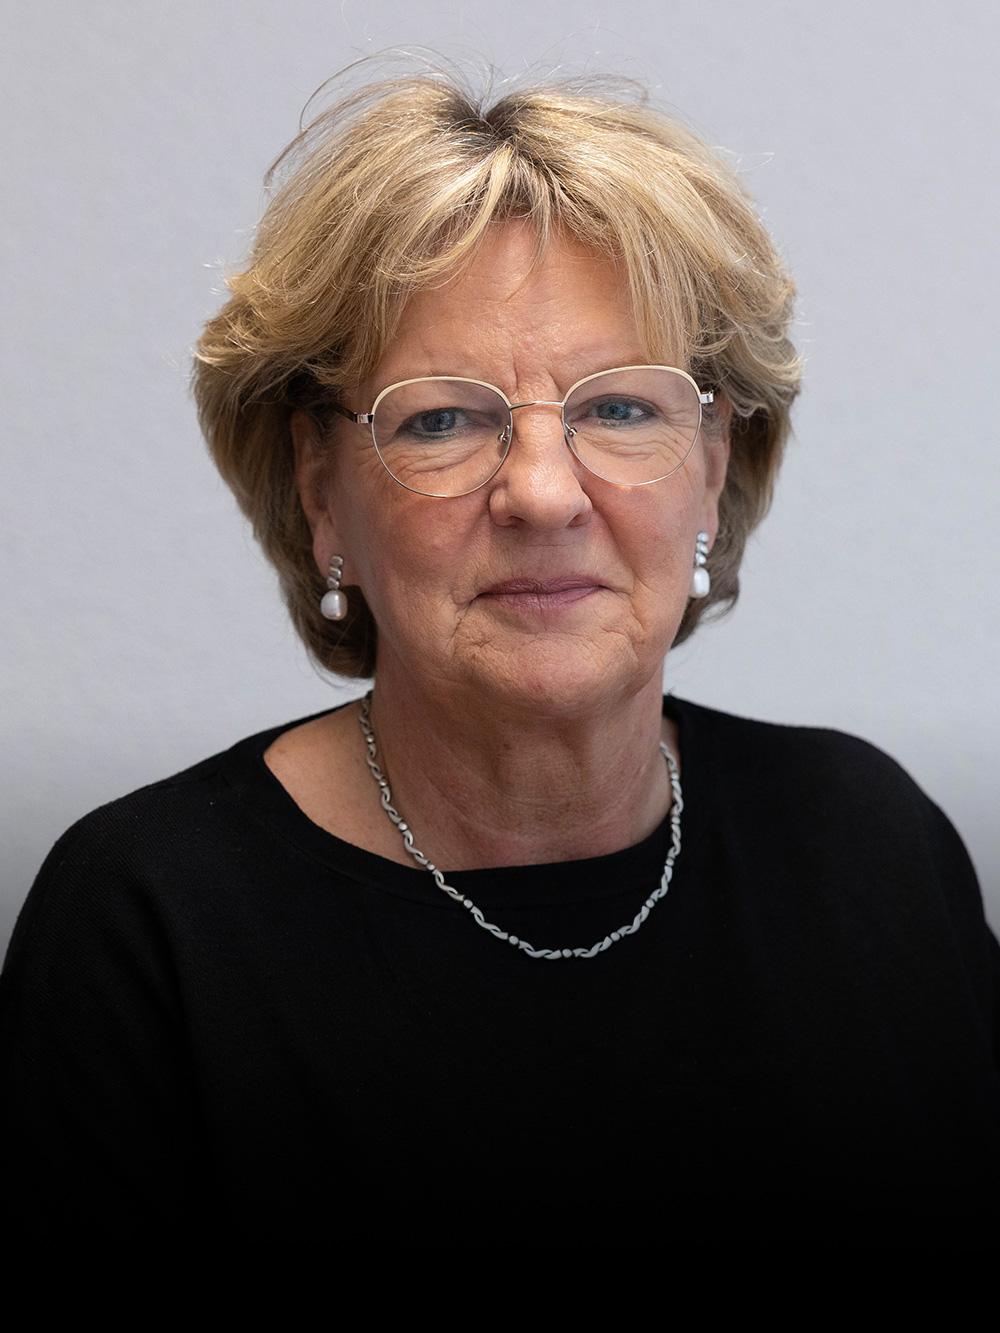 Heike Müller